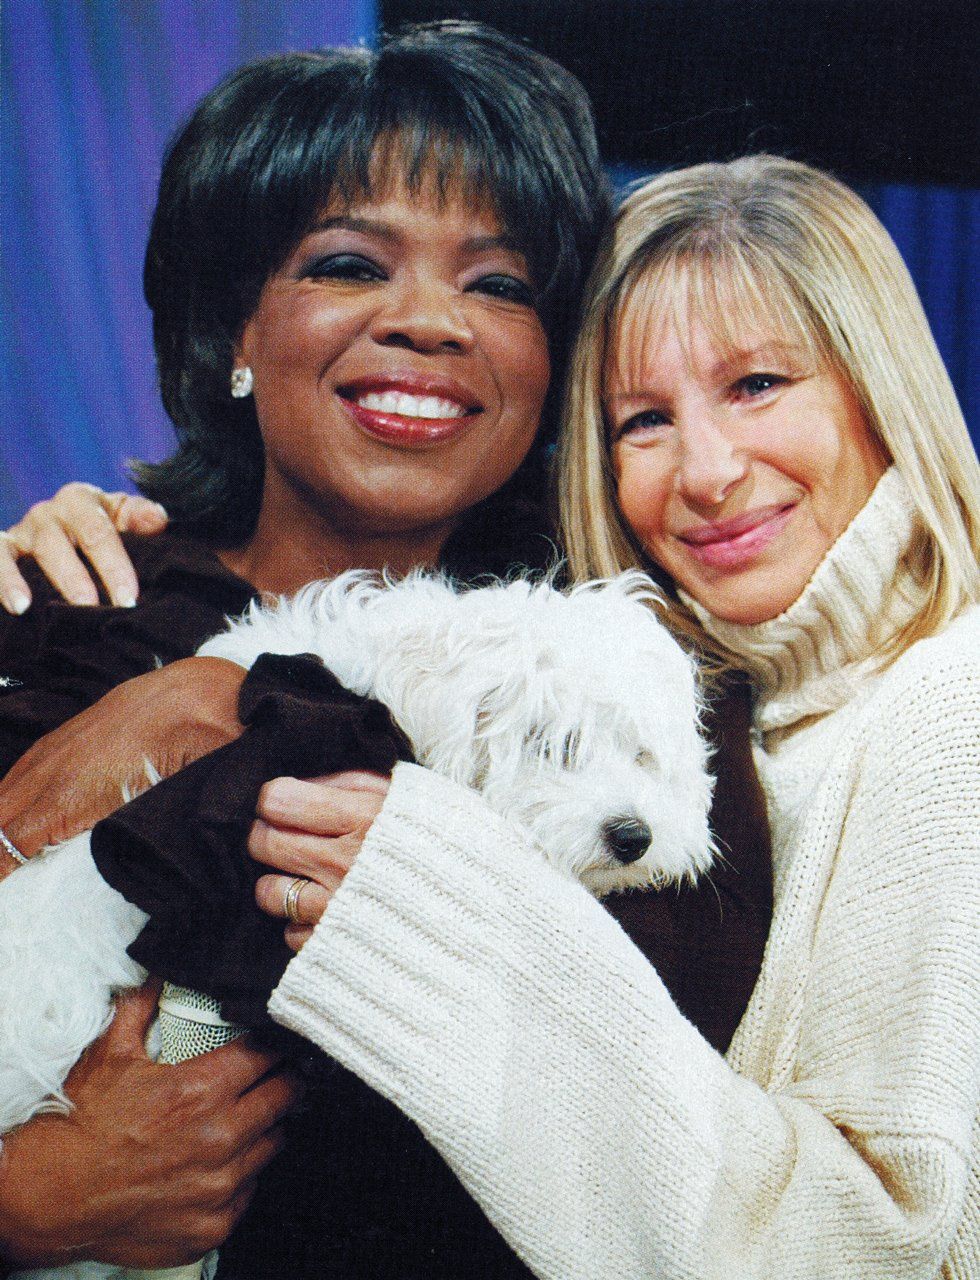 Oprah and Barbra pose with Barbra's dog, Sammie.